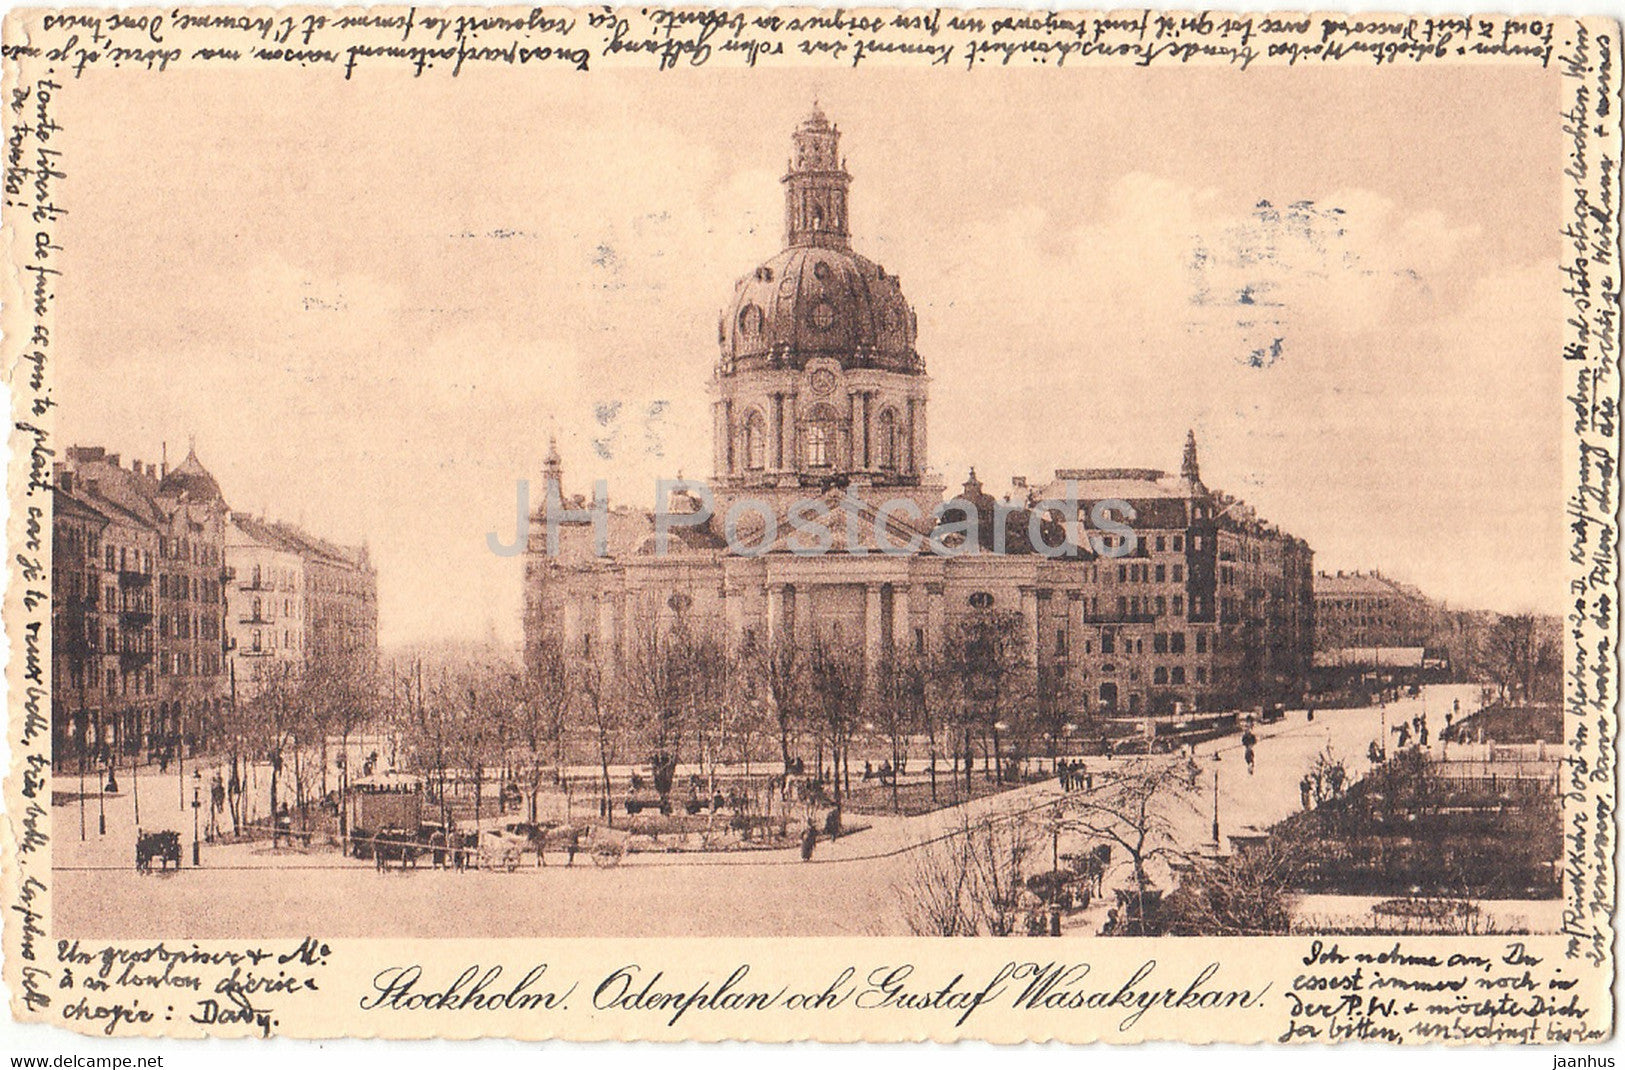 Stockholm - Odenplan och Gustaf Wasakyrkan - church - old postcard - 1919 - Sweden - used - JH Postcards